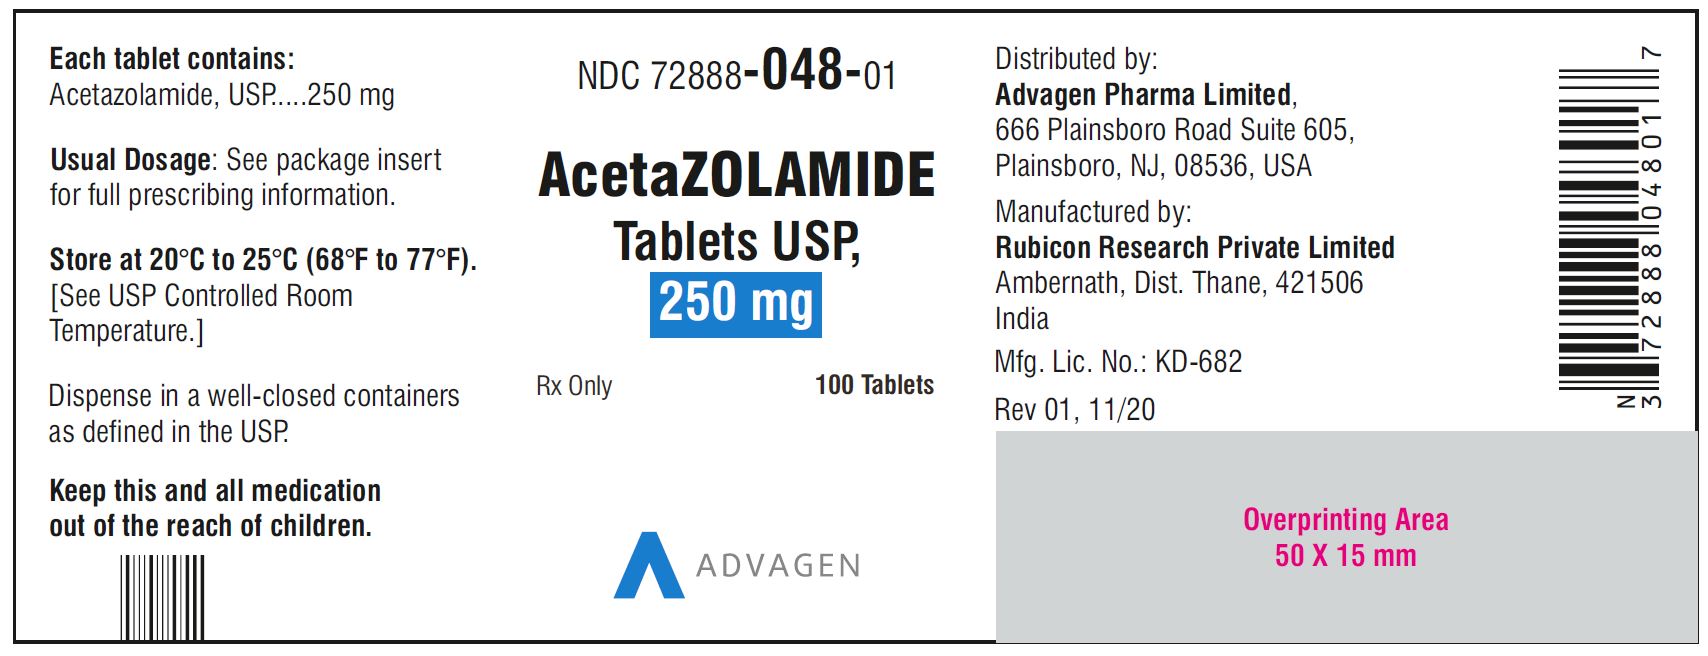 AcetaZOLAMIDE Tablets USP, 250 mg - NDC: <a href=/NDC/72888-048-01>72888-048-01</a> - 100 Tablets Bottle Label